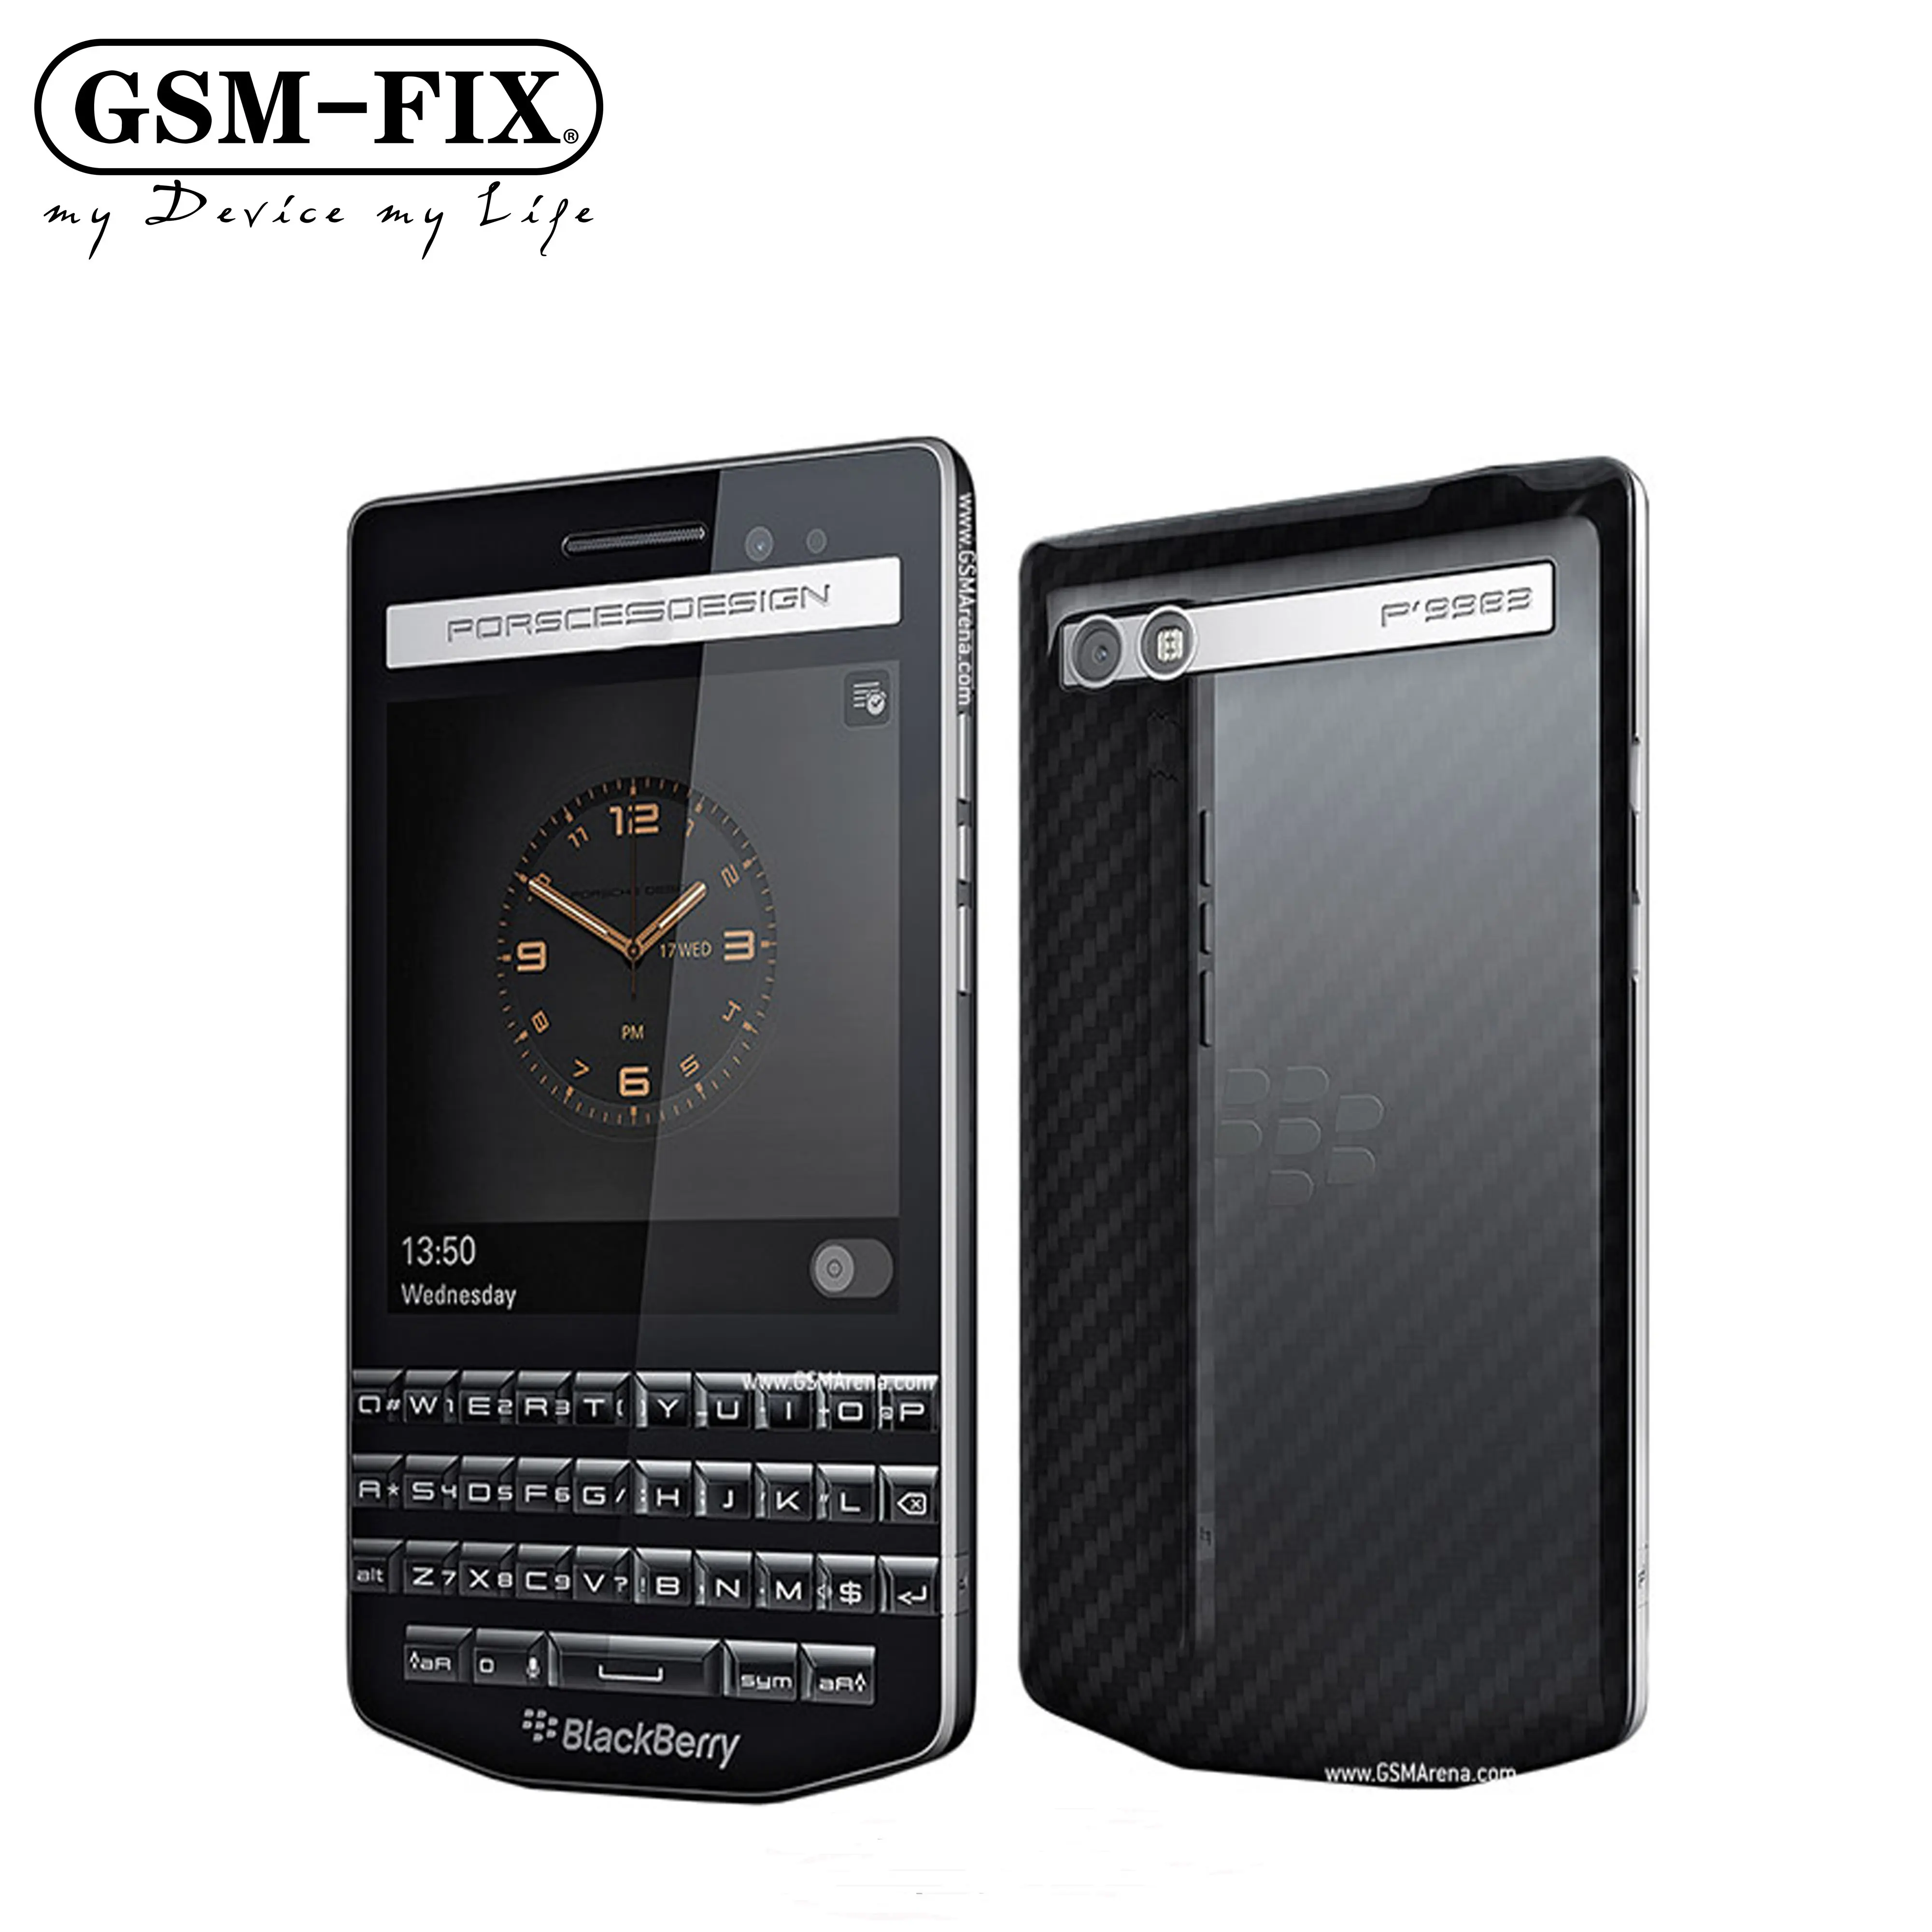 Teléfono móvil 4G LTE para BlackBerry Porsche Design P'9983, 3,1 pulgadas, IPS, LCD, inteligente, Snapdragon S4 Pro, teléfono móvil de doble núcleo